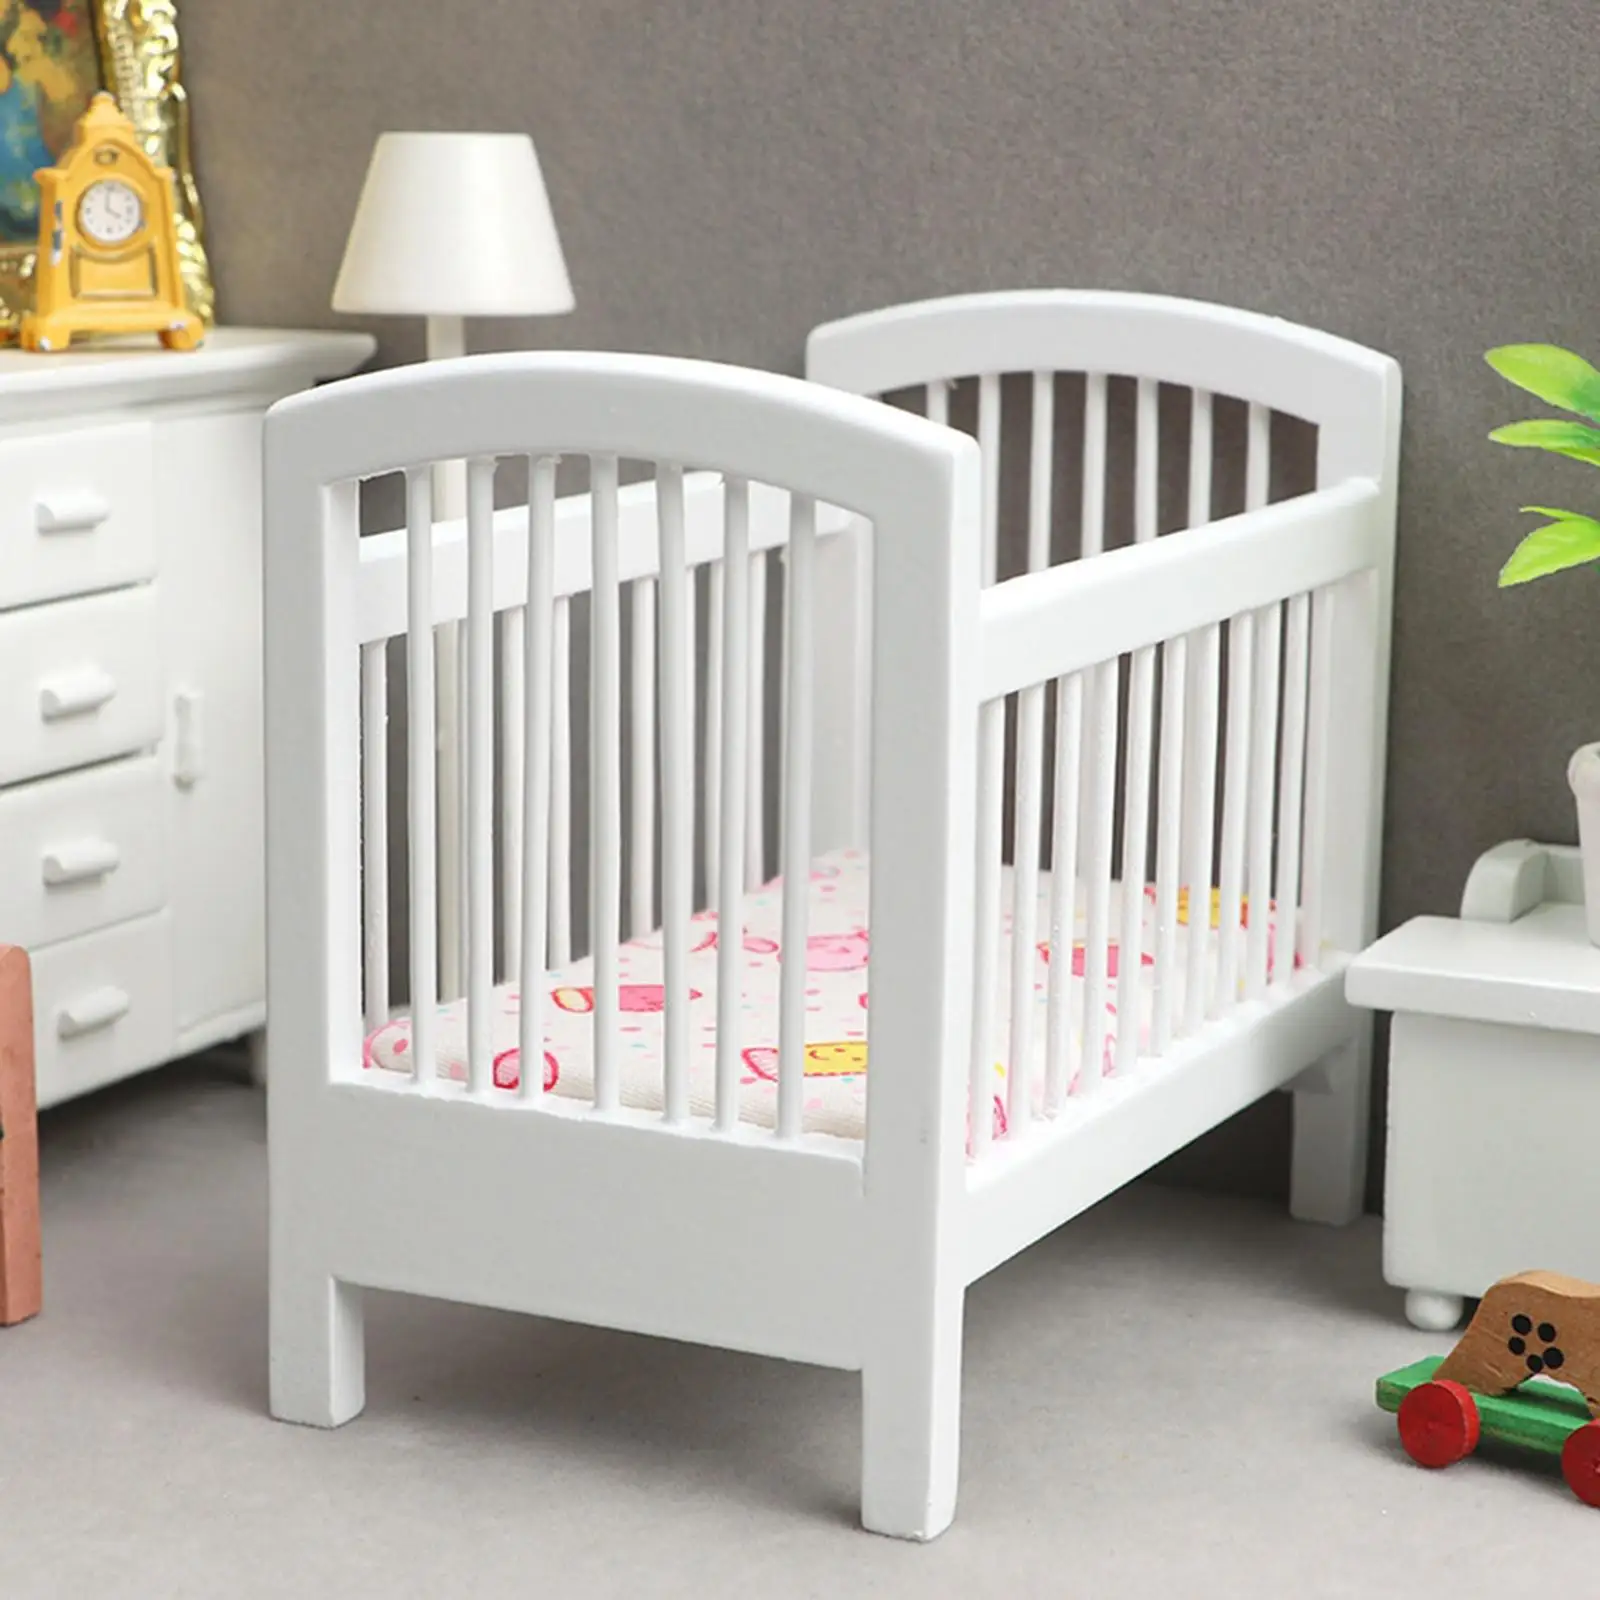 Dollhouse Miniature Wooden Crib Furniture Set with Mattress for Dolls Decor